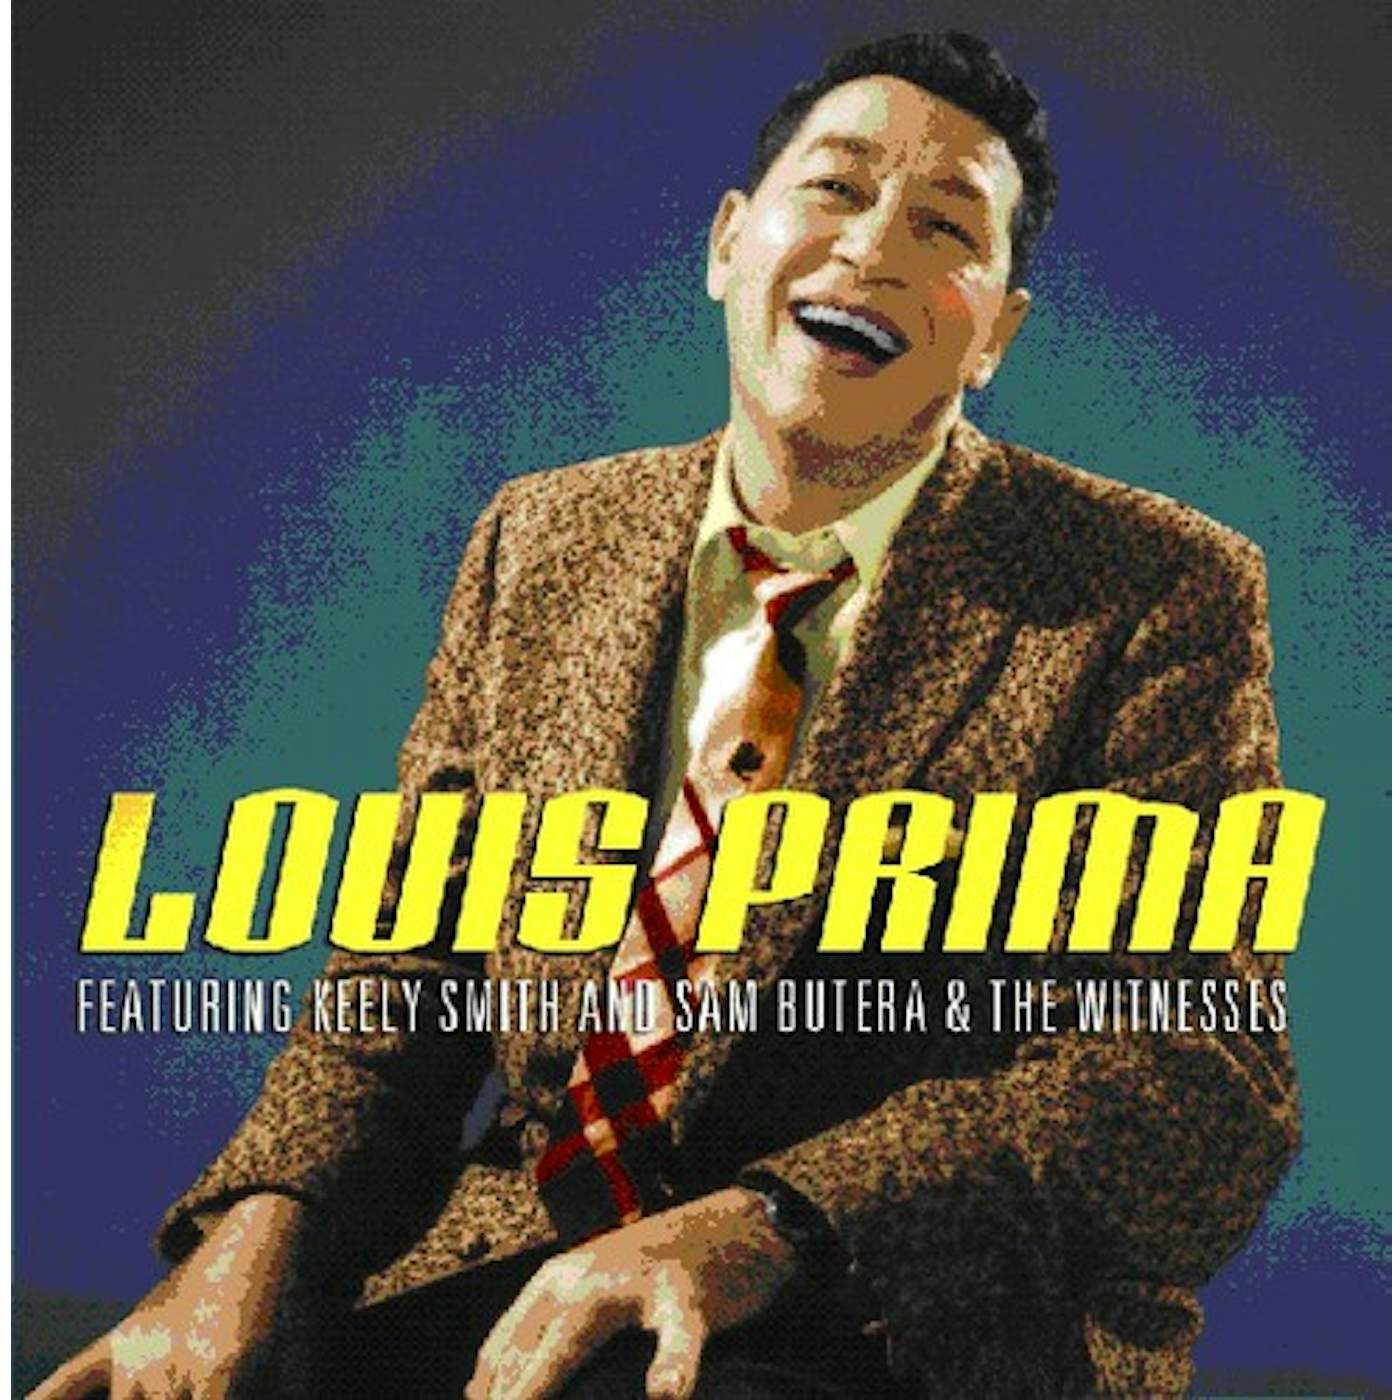 Louis Prima WONDERLAND BY NIGHT CD $18.99$16.99